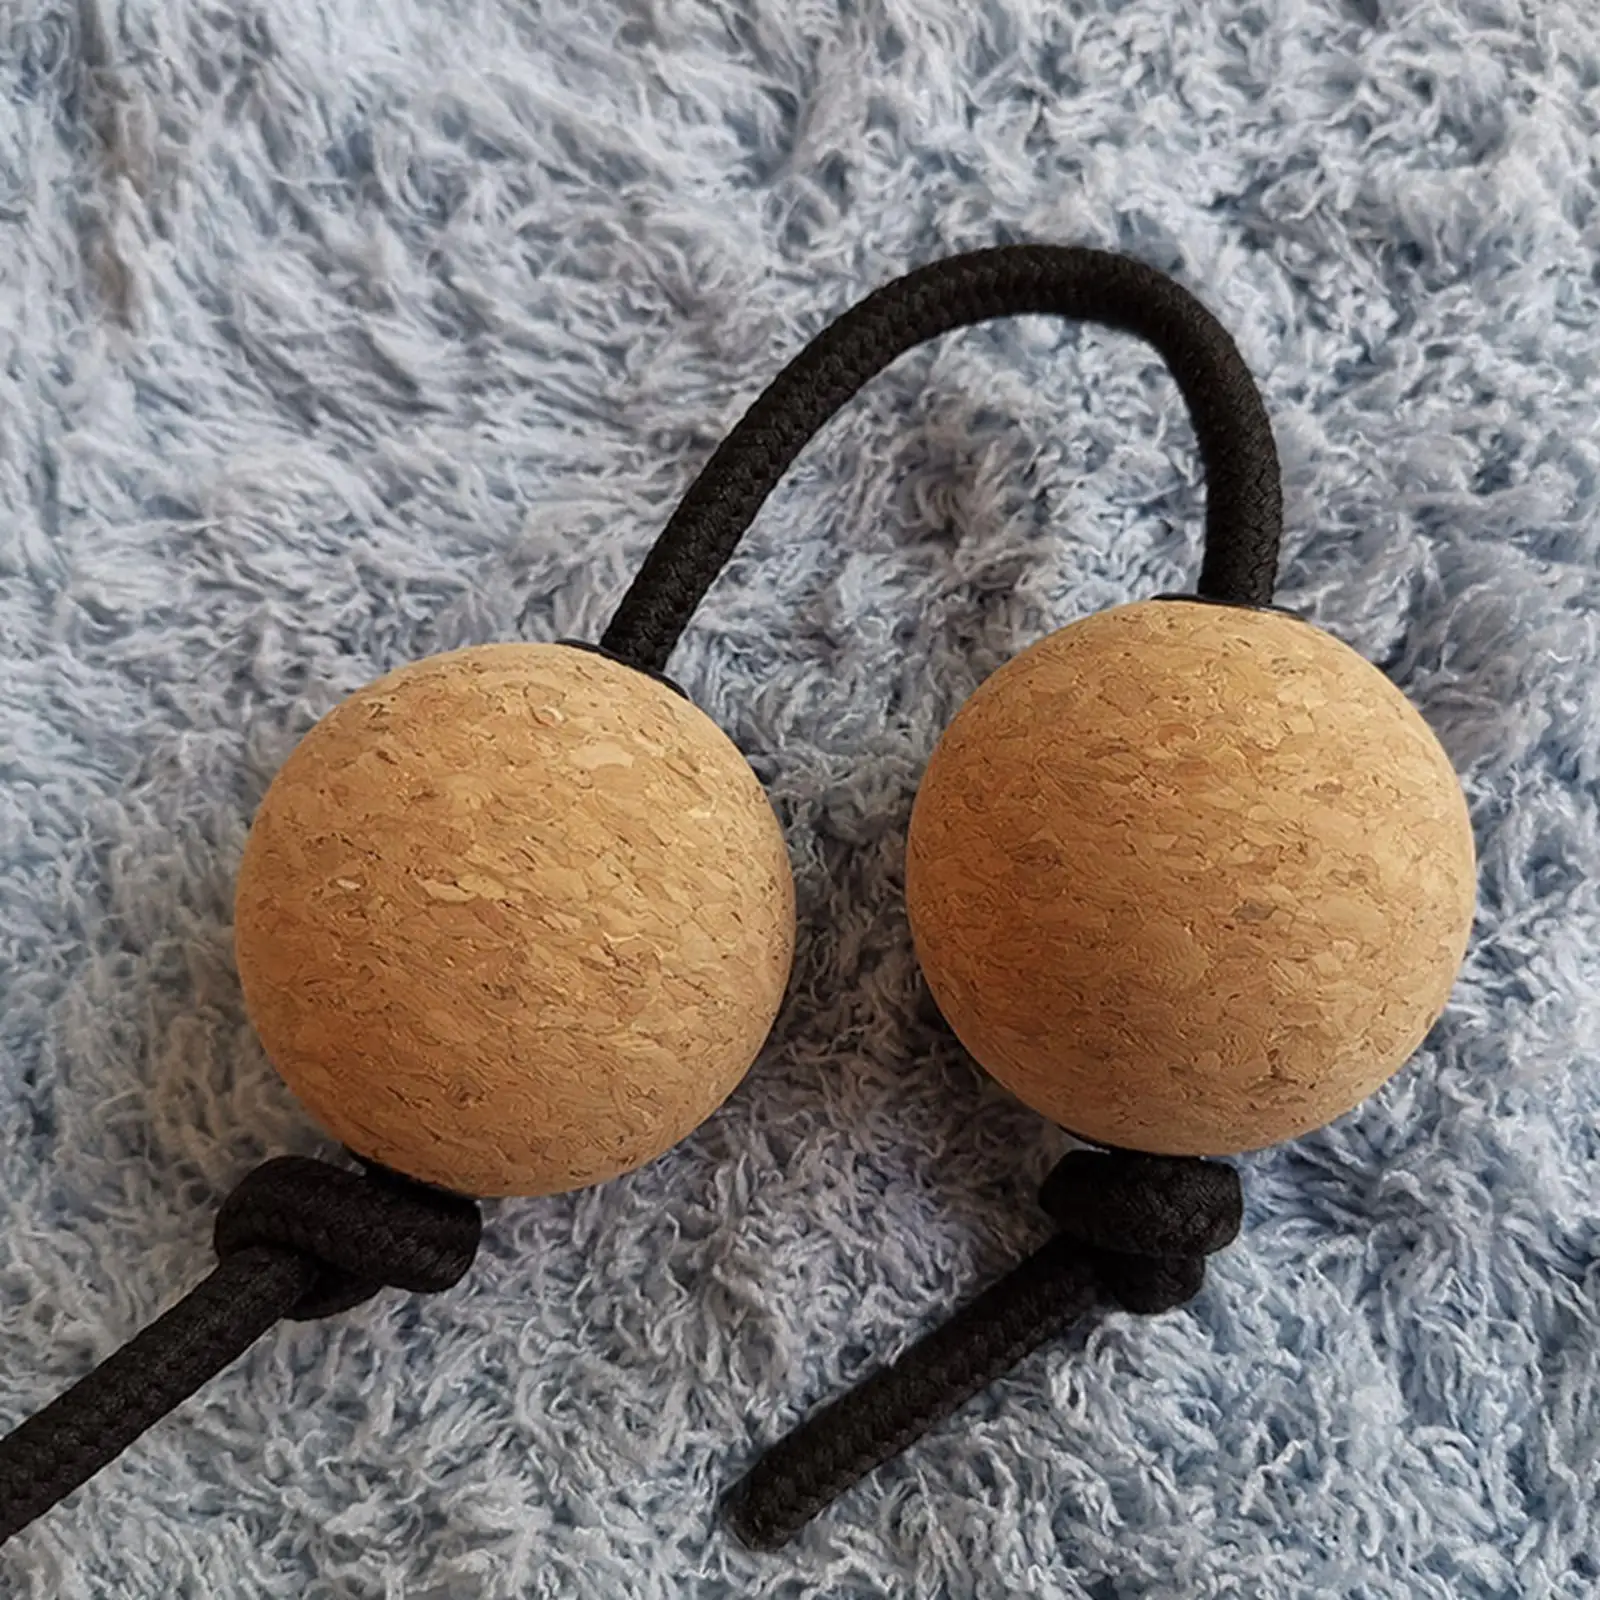 Cork Rhythmic Sand Balls Small Musical Instrument Fingertip Ball for Adults Kids